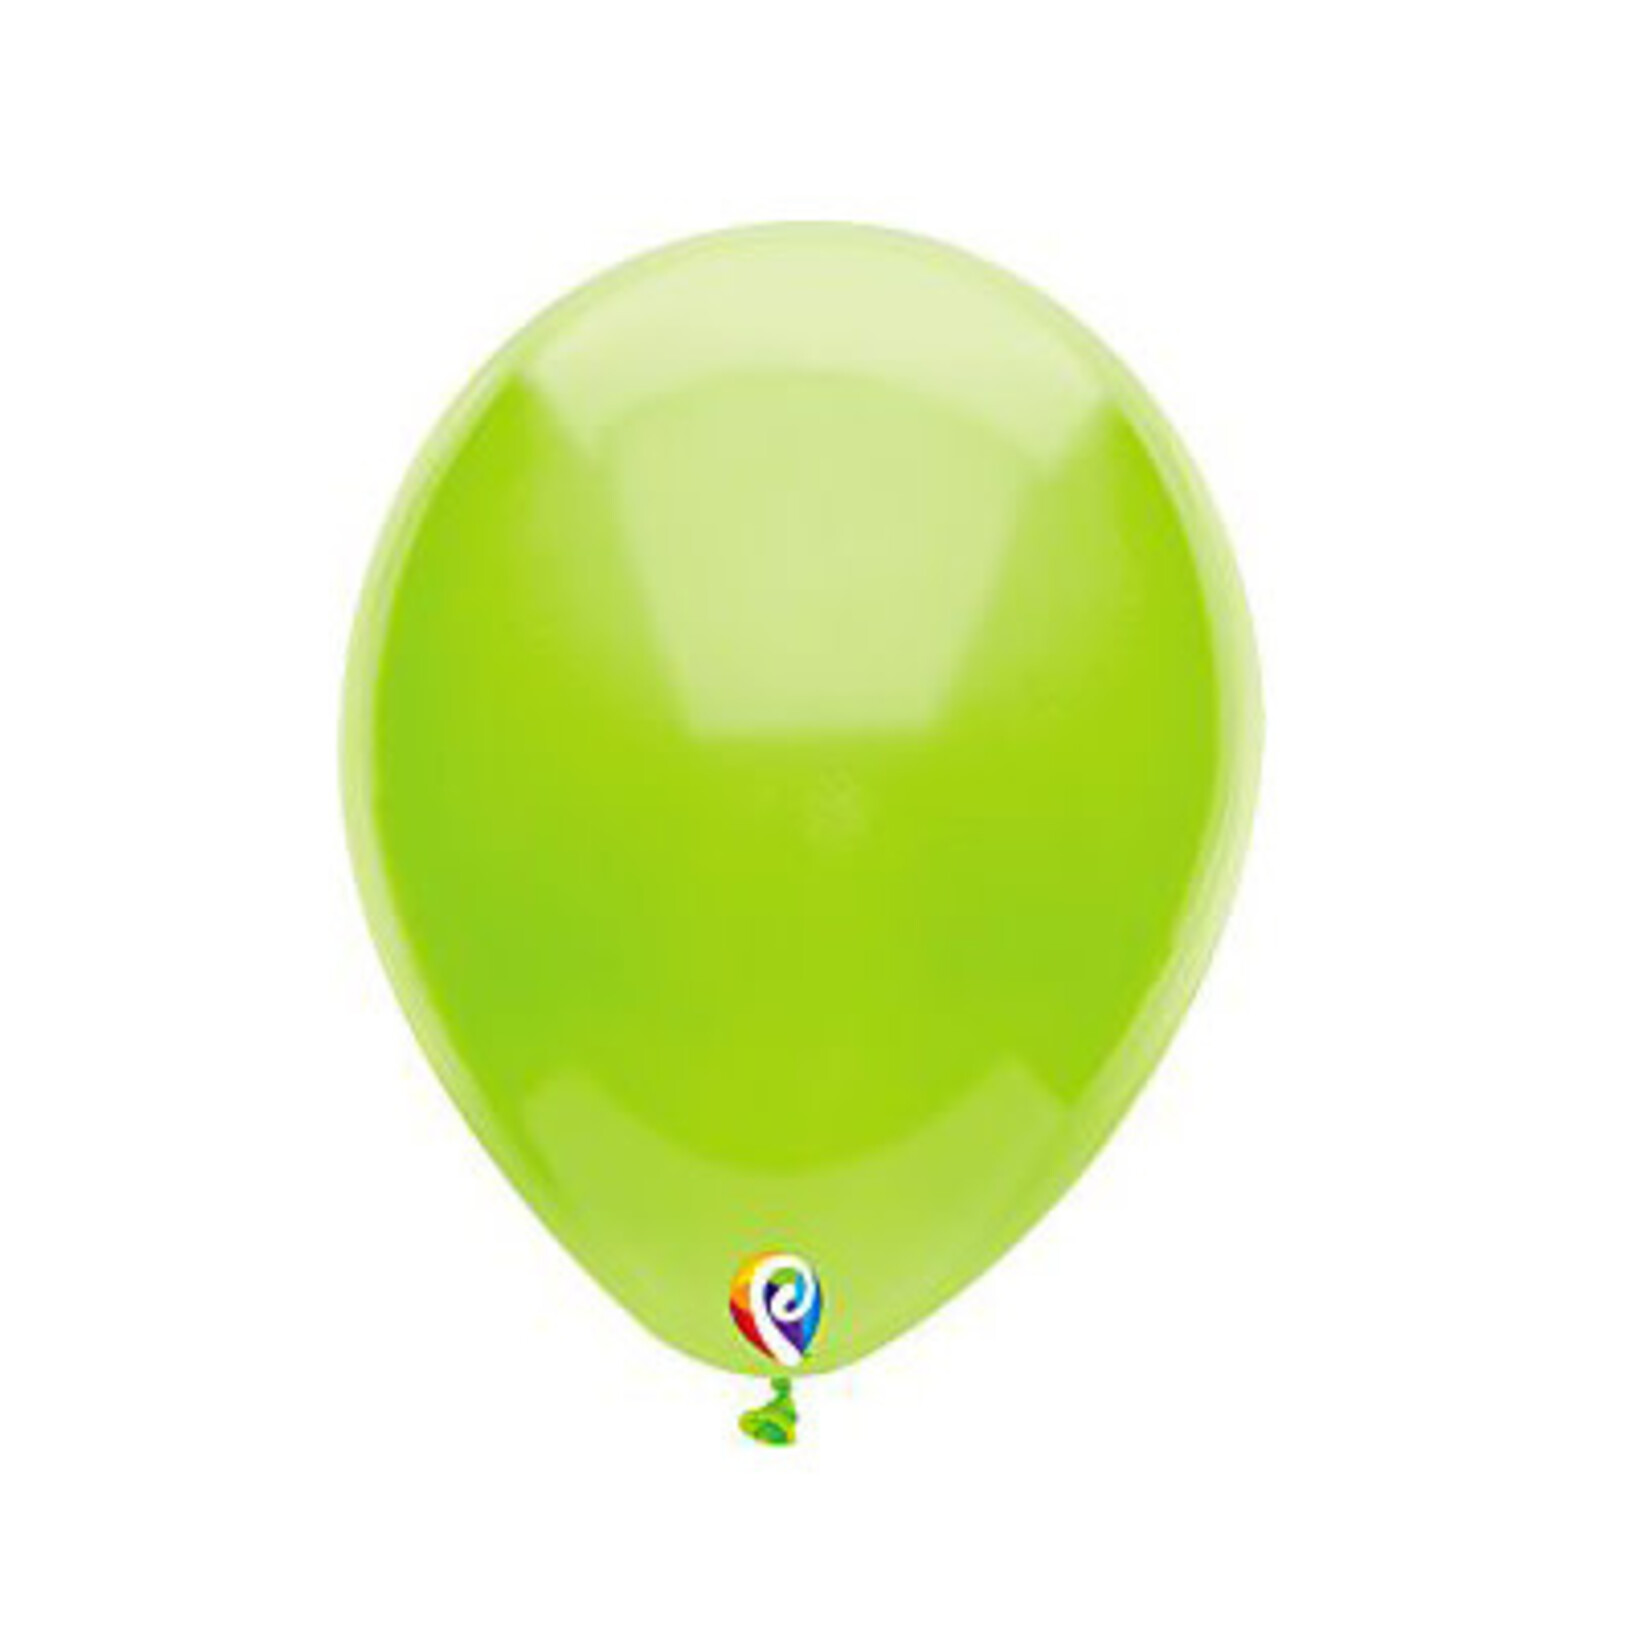 Funsational 12" Lime Green Funsational Latex Balloons - 50ct.